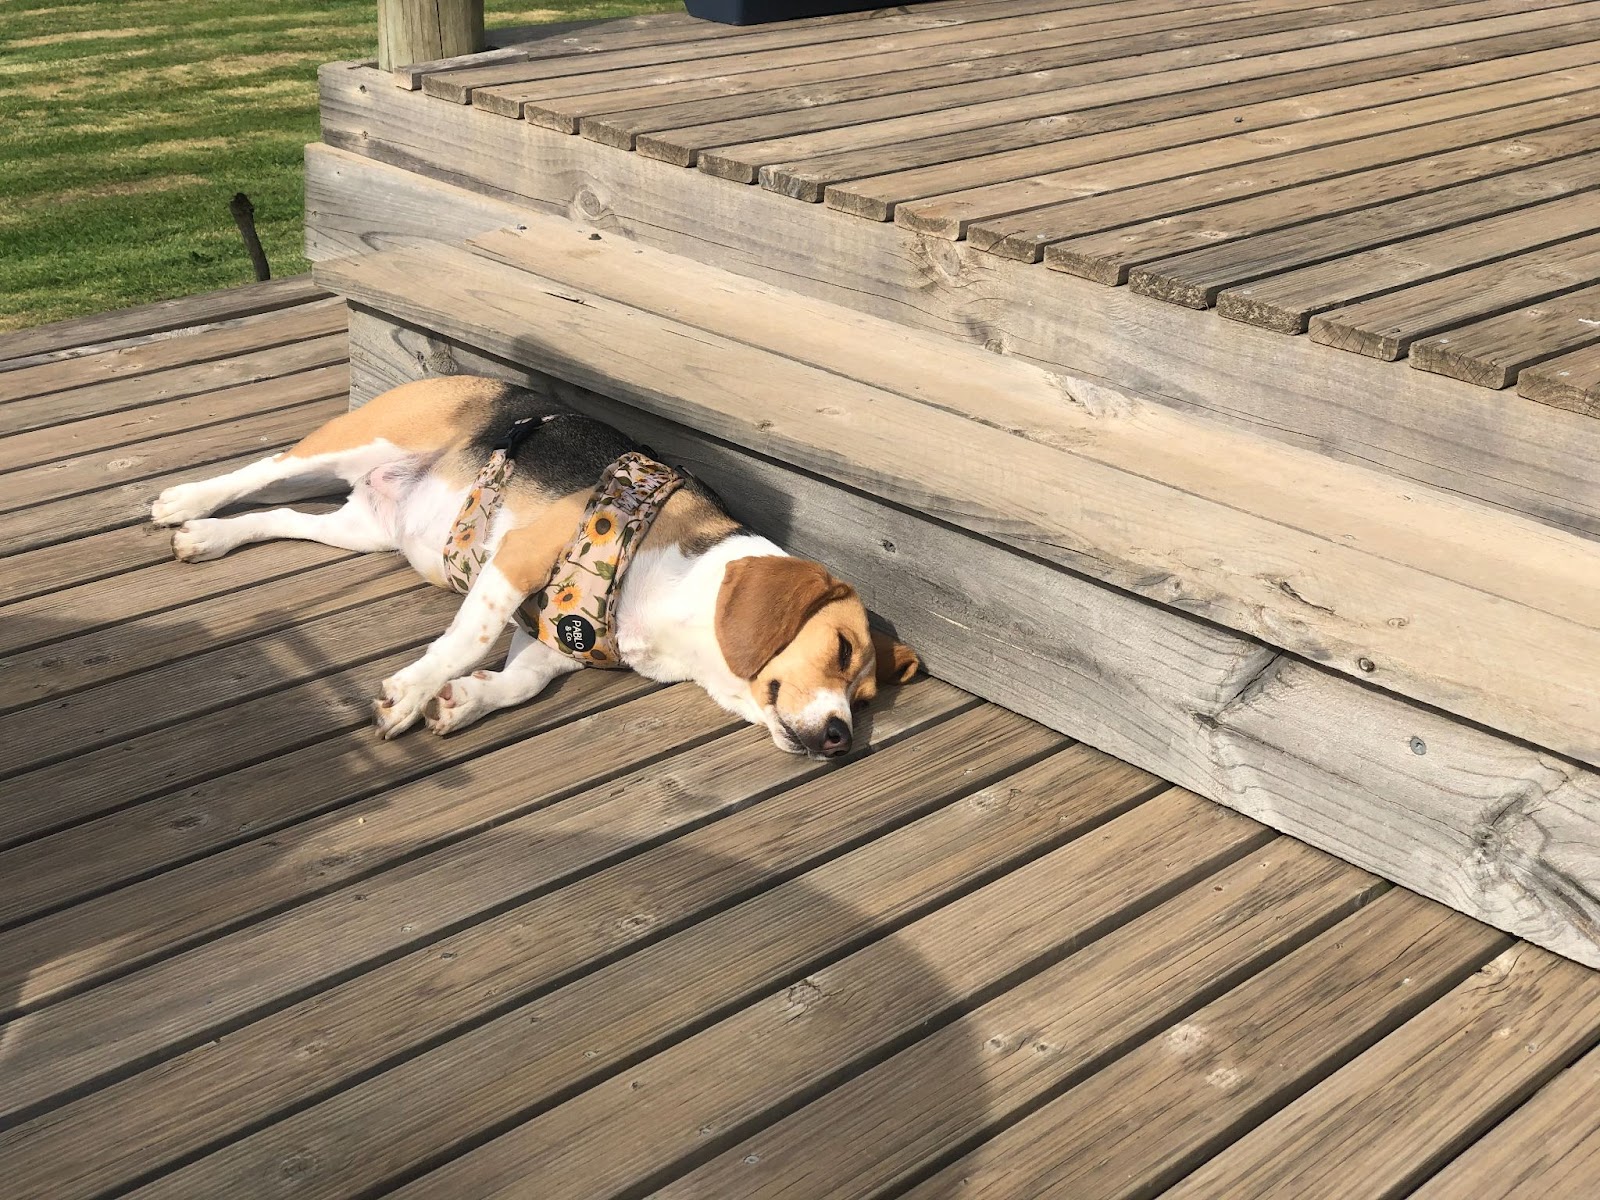 Little Molly, a cute Beagle snoozing